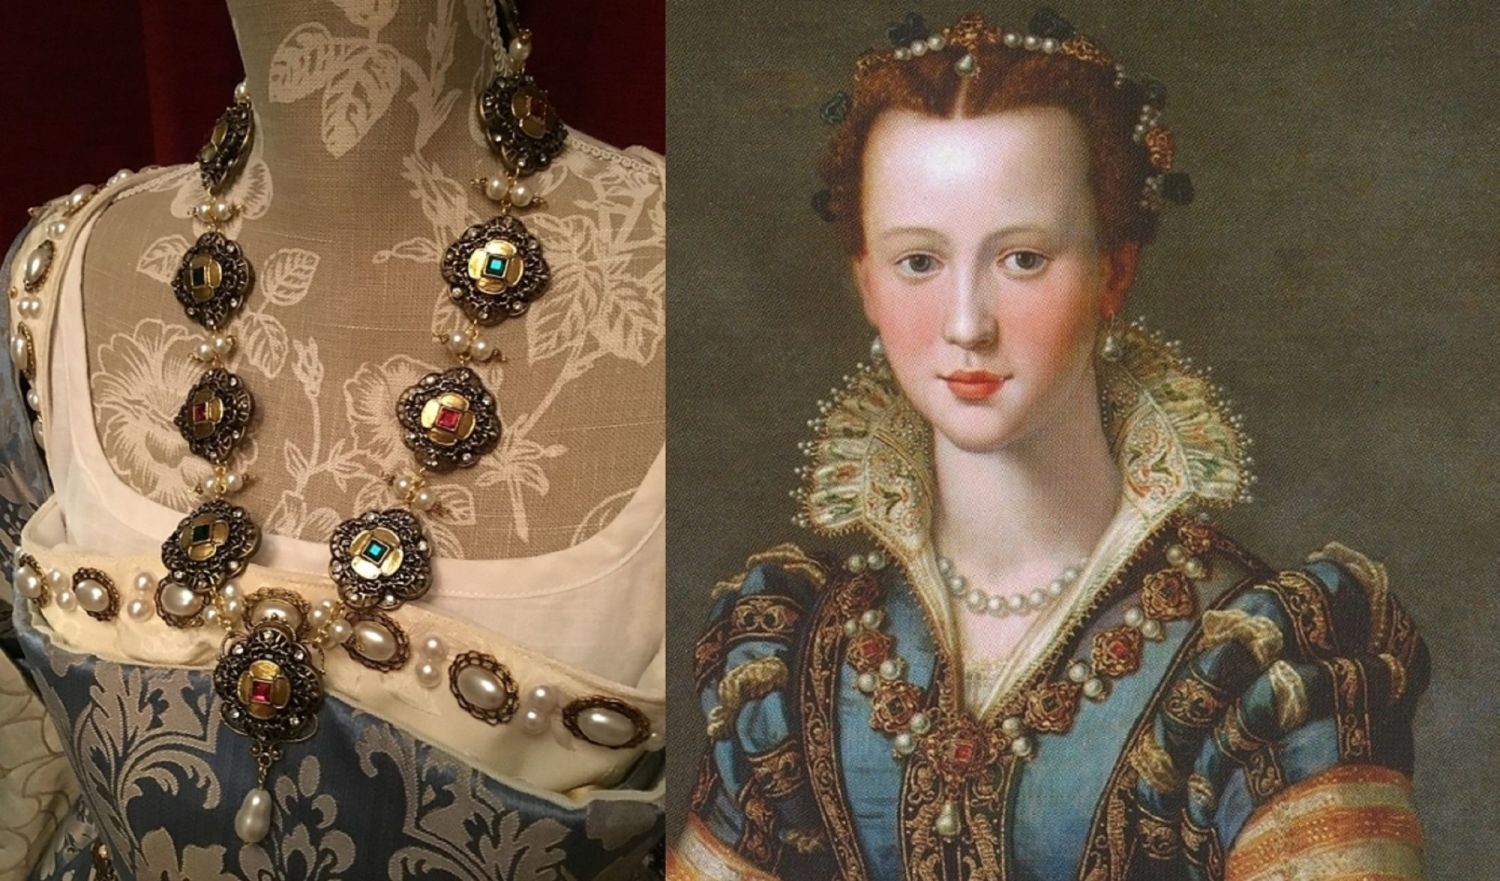 Eleanora necklace close compare.jpg1